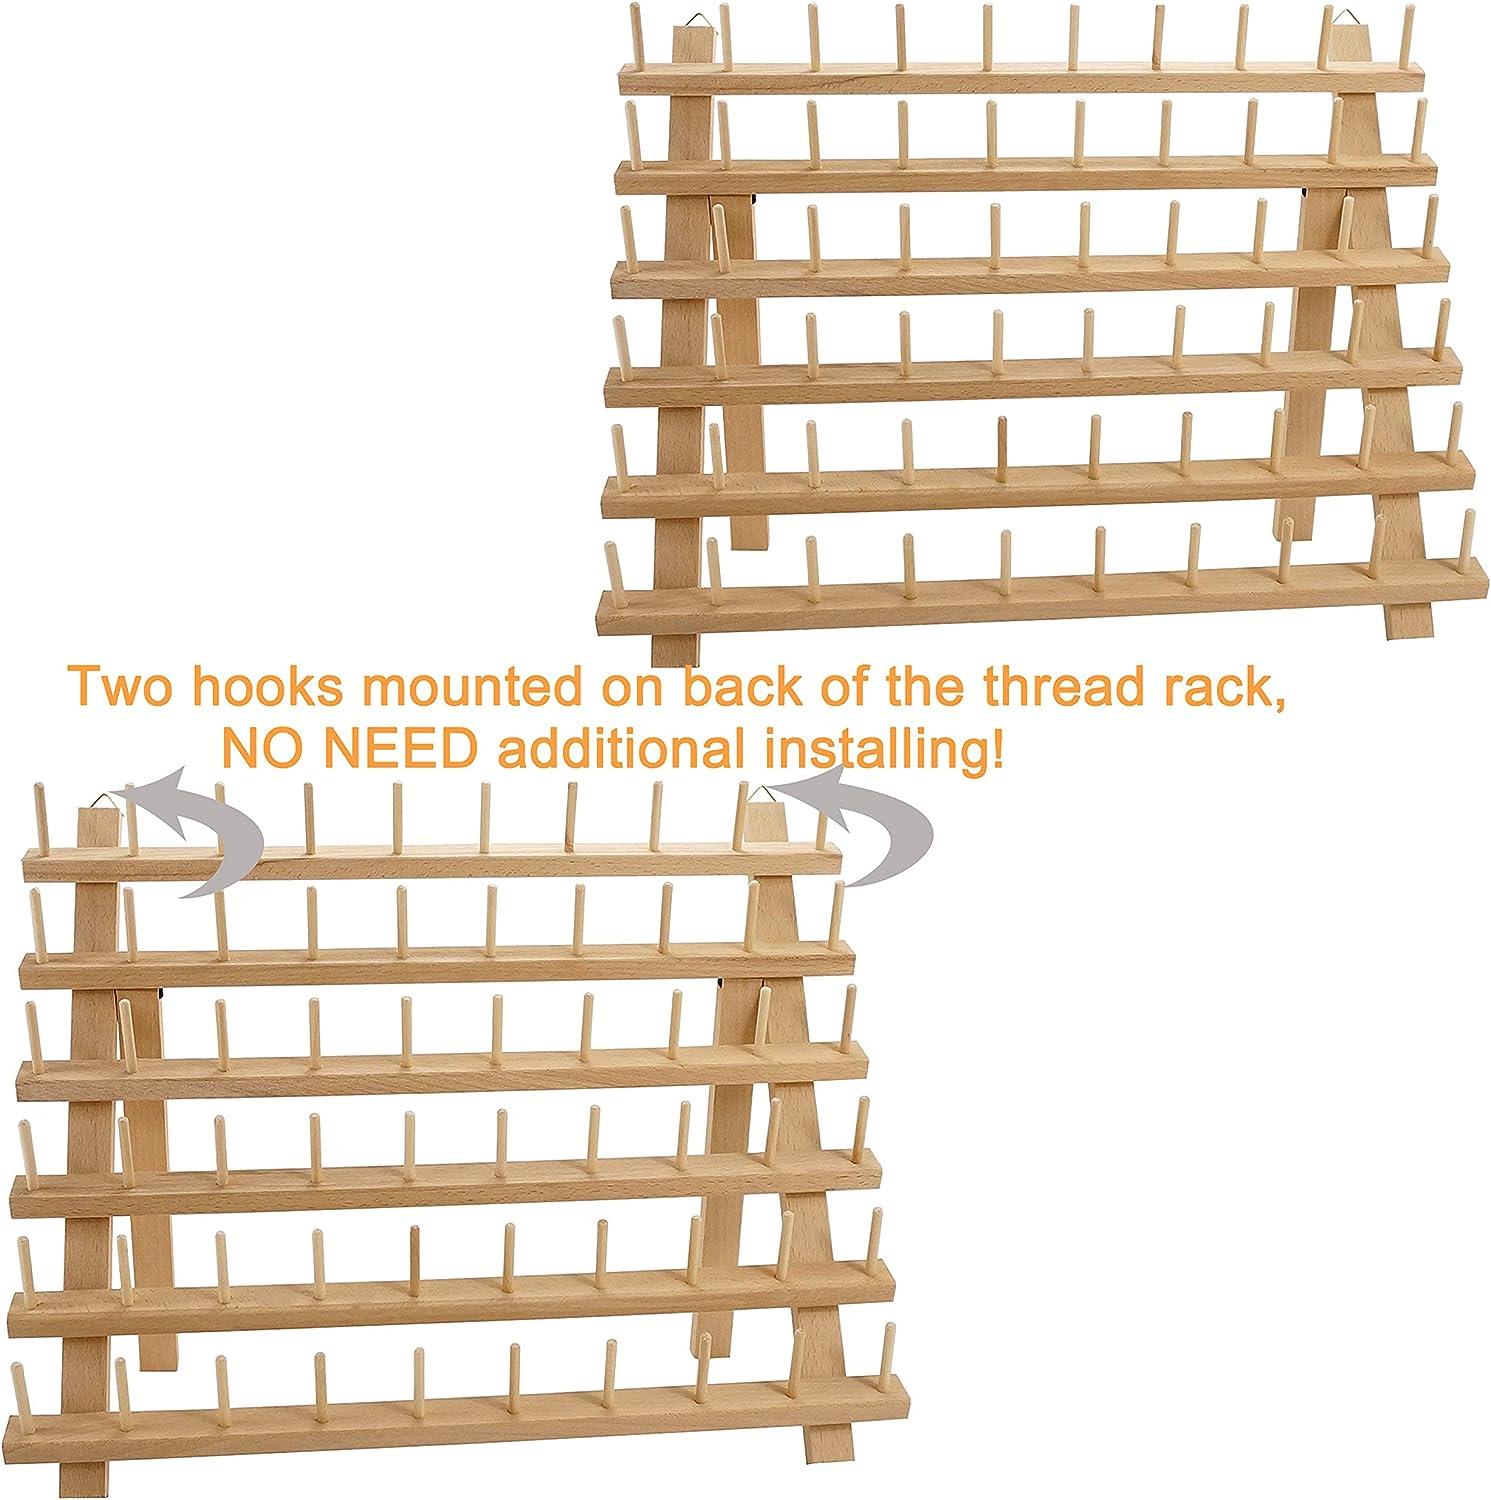 60 Spools Wooden Thread Rack/thread Holder Organizer With Hanging